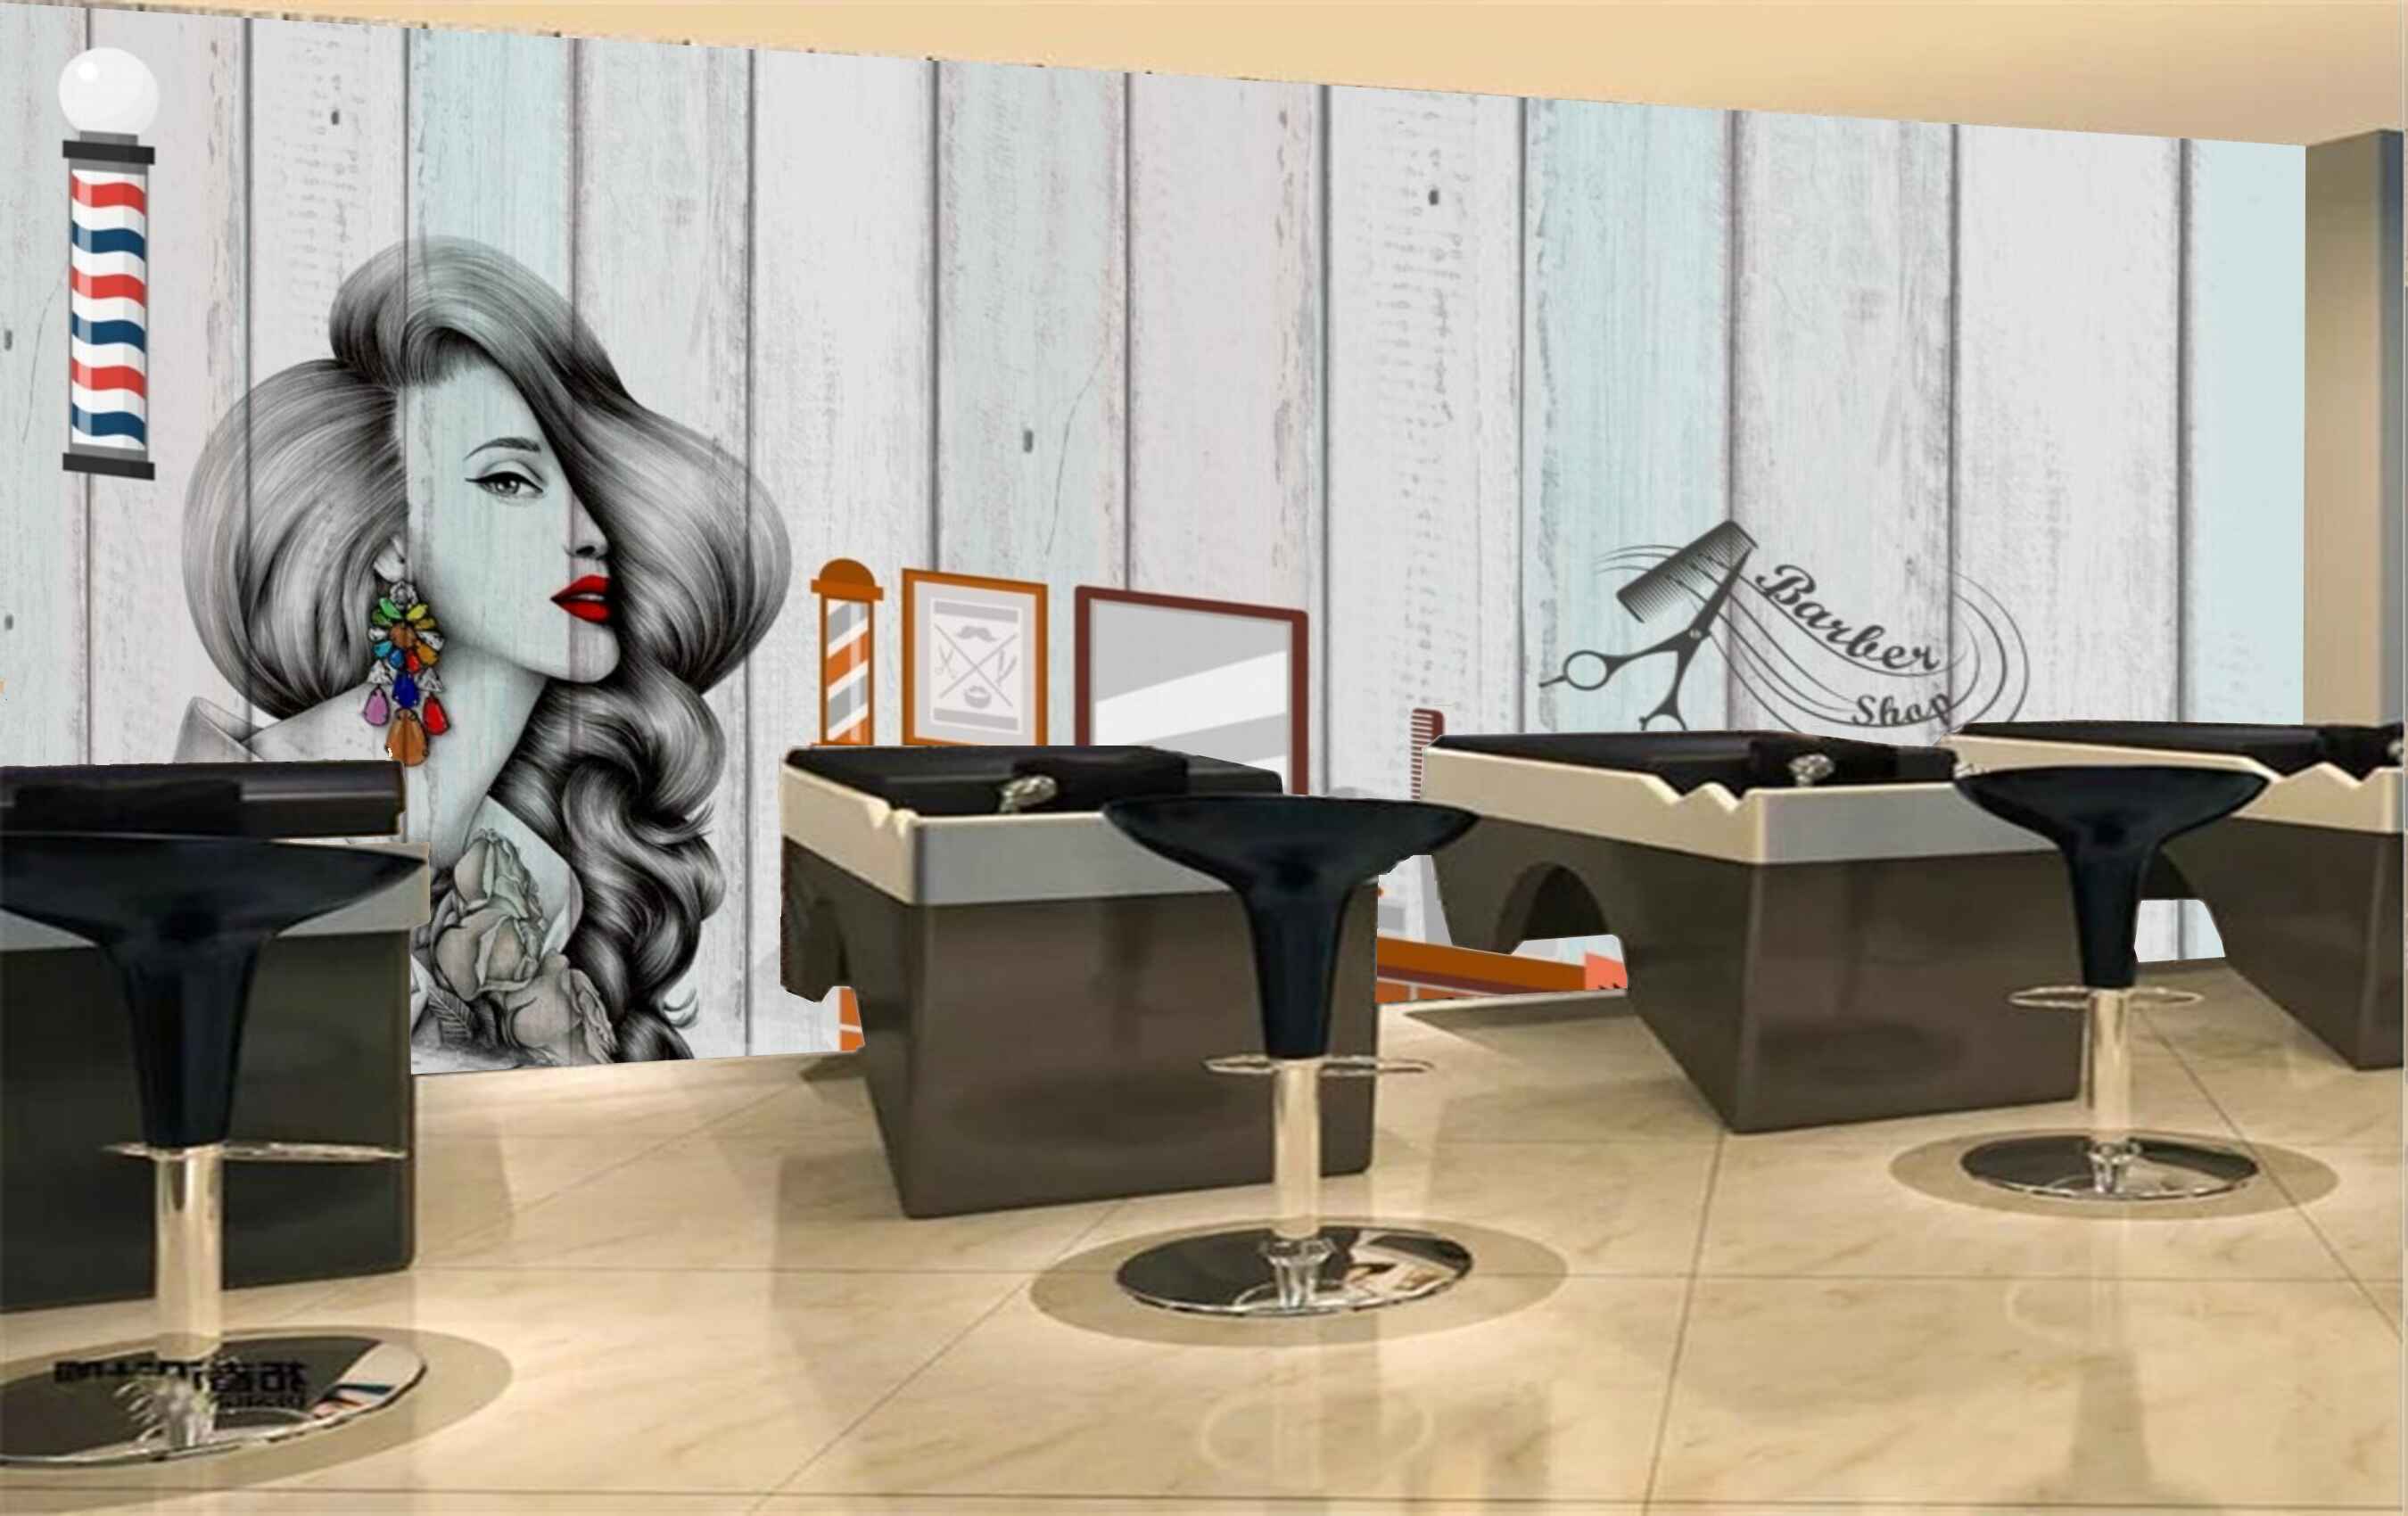 Avikalp MWZ3634 Barber Shop Girls Fashion Parlour HD Wallpaper for Salon Parlour